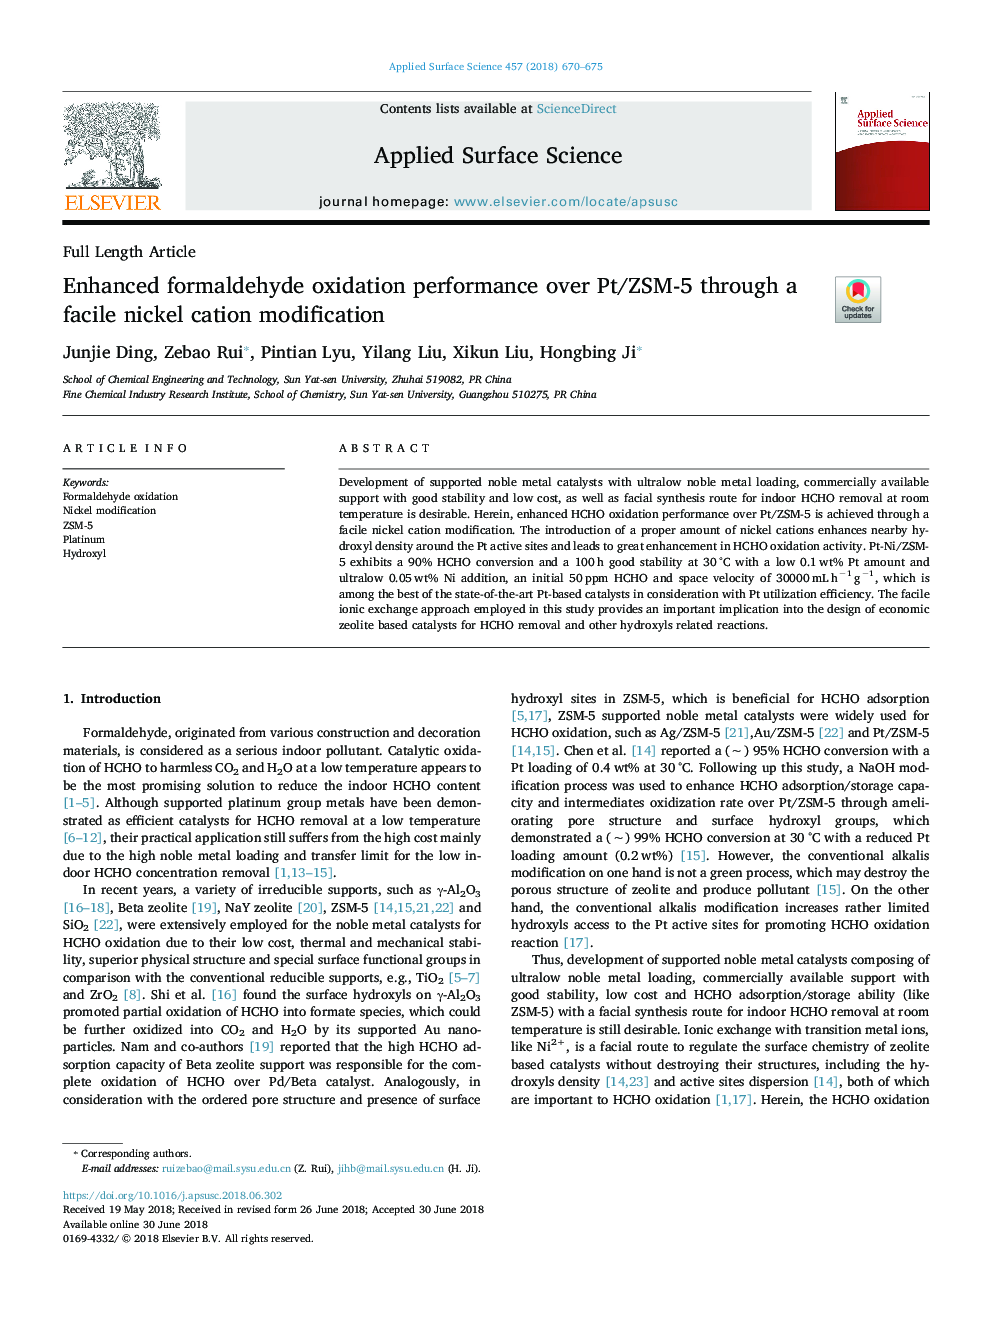 Enhanced formaldehyde oxidation performance over Pt/ZSM-5 through a facile nickel cation modification